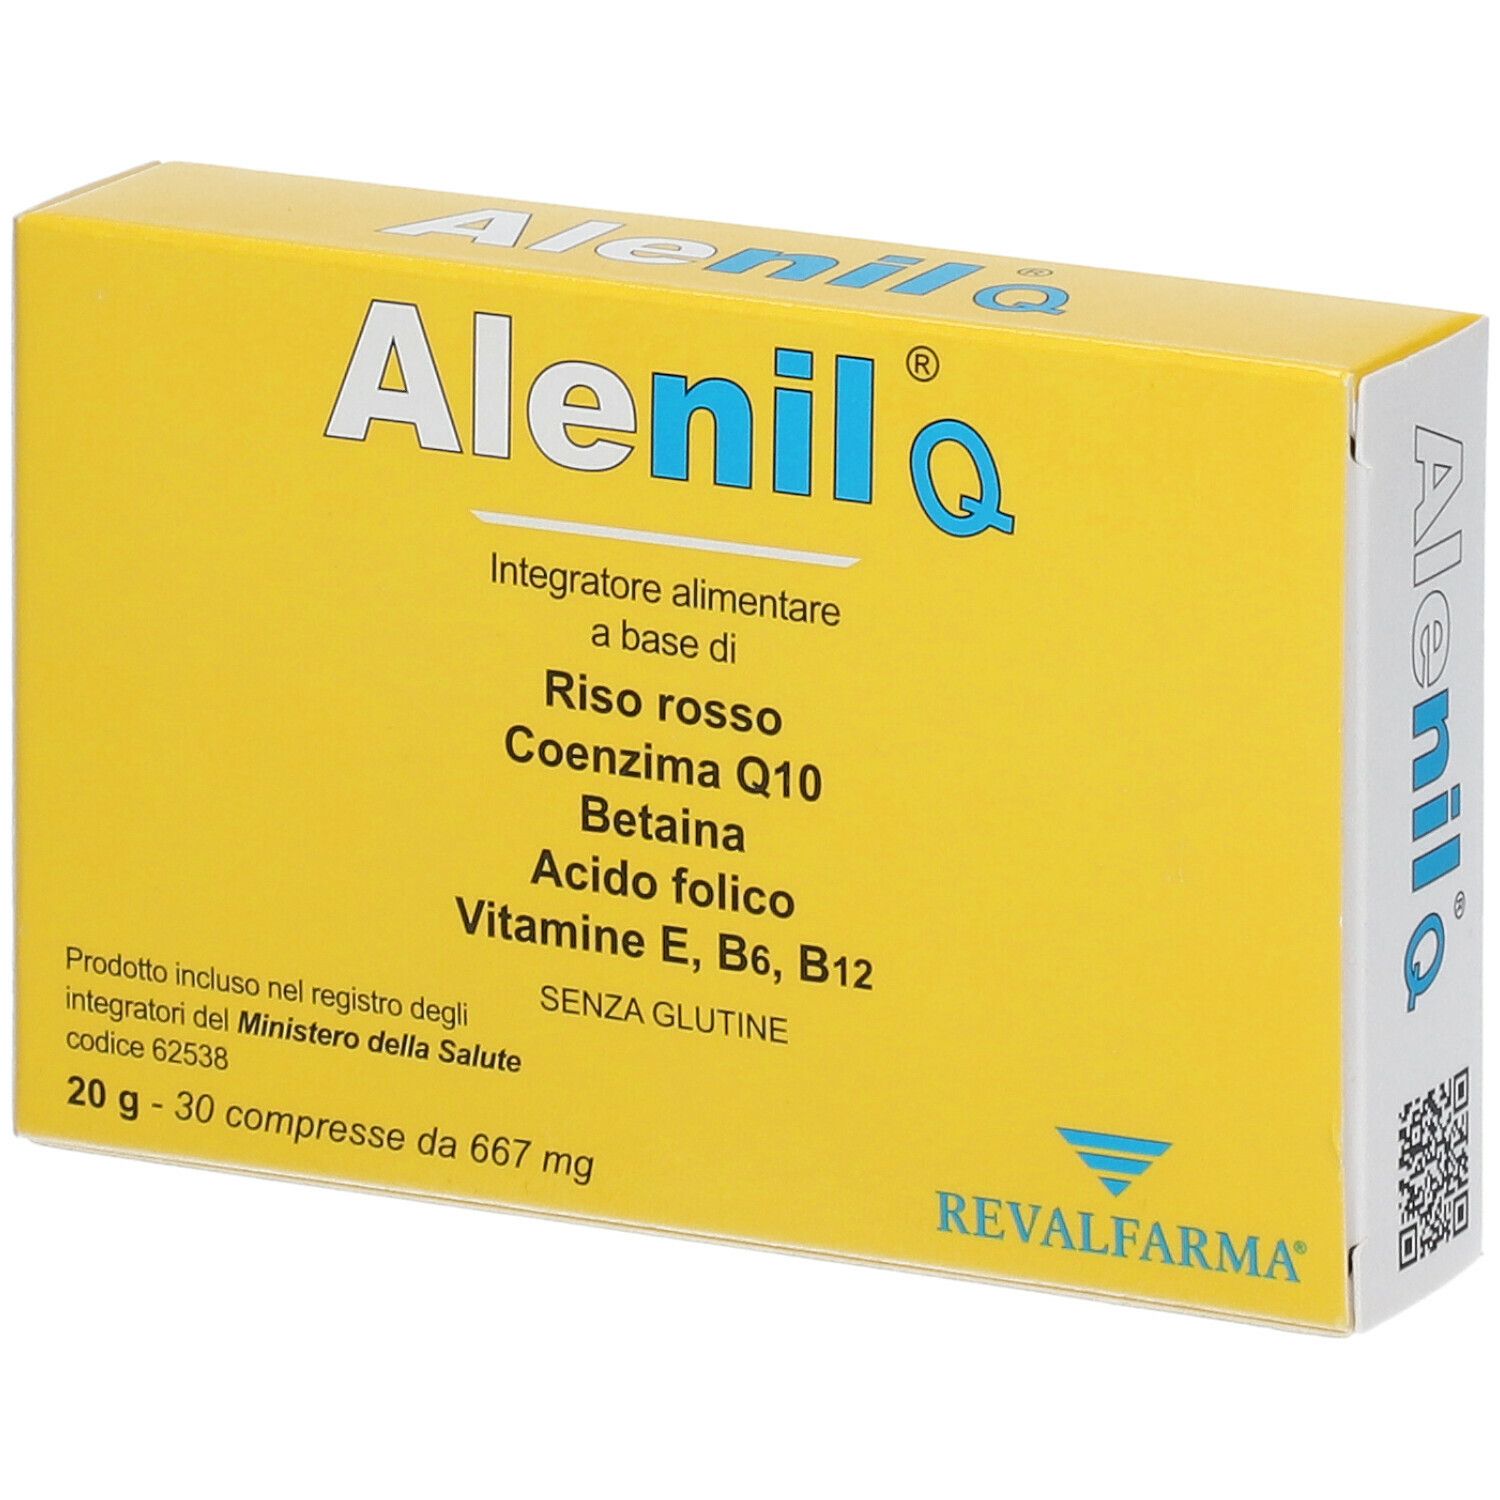 Revalfarma Srl Alenil Q® 30 pz Compresse